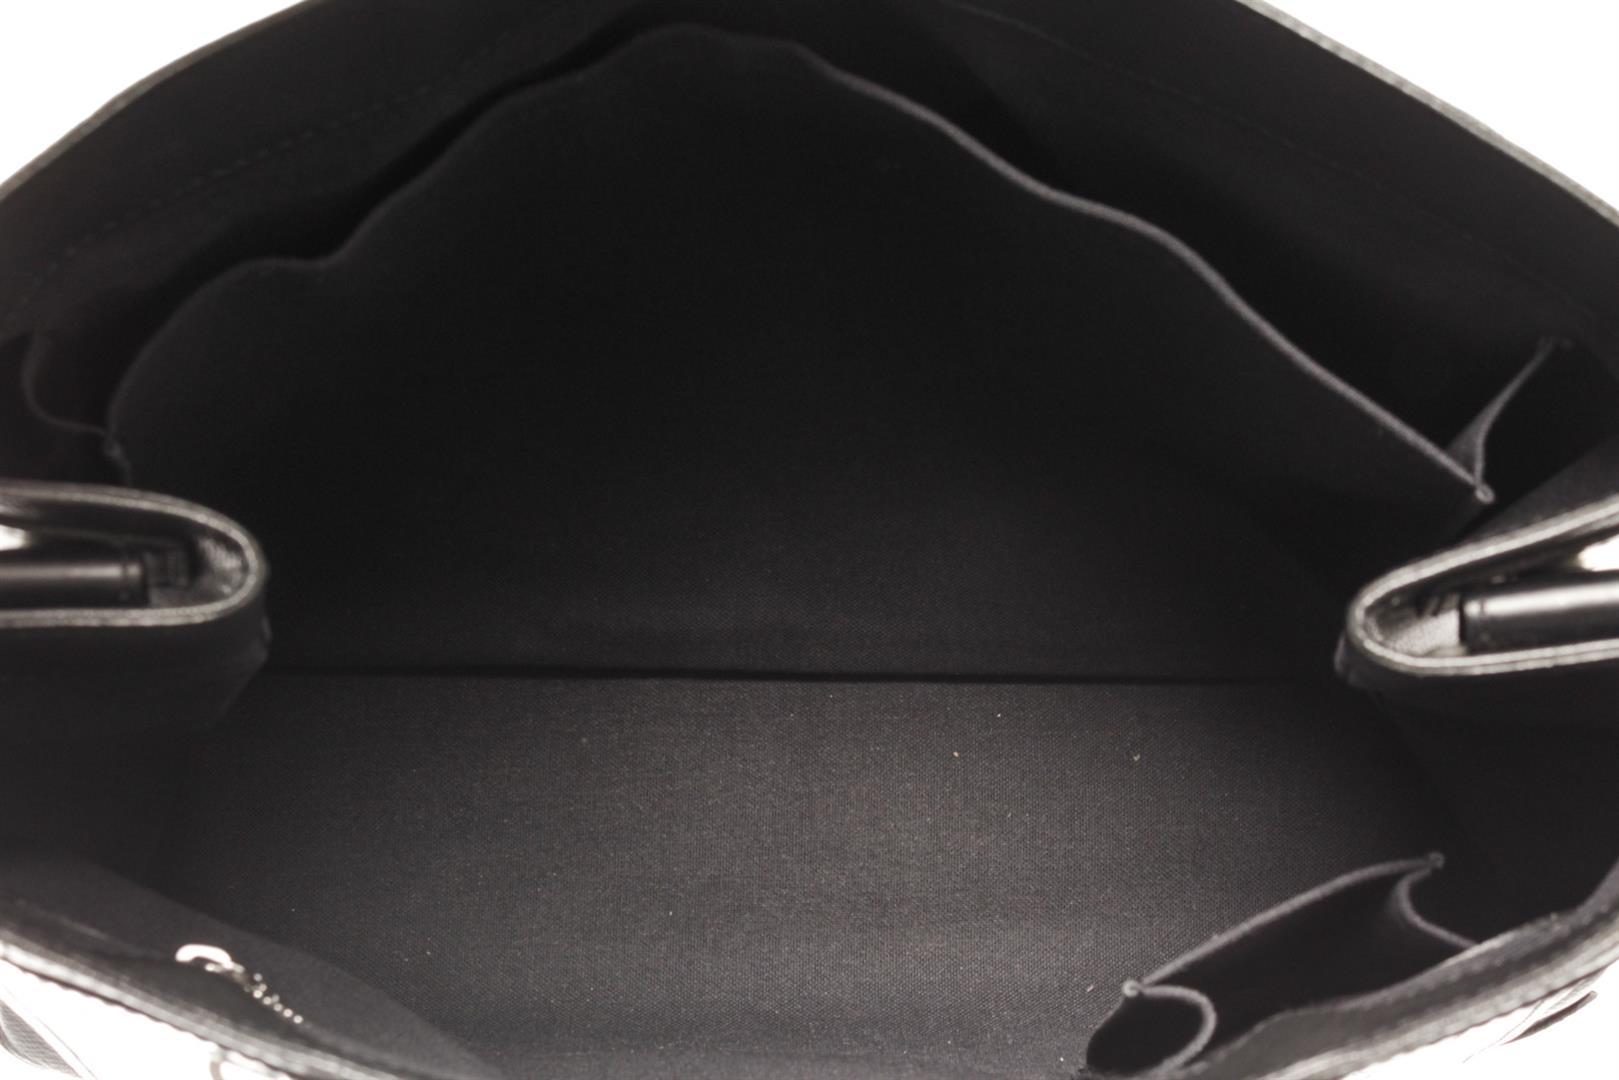 Louis Vuitton Black Taiga Leather Kasbek Pm Tote Bag